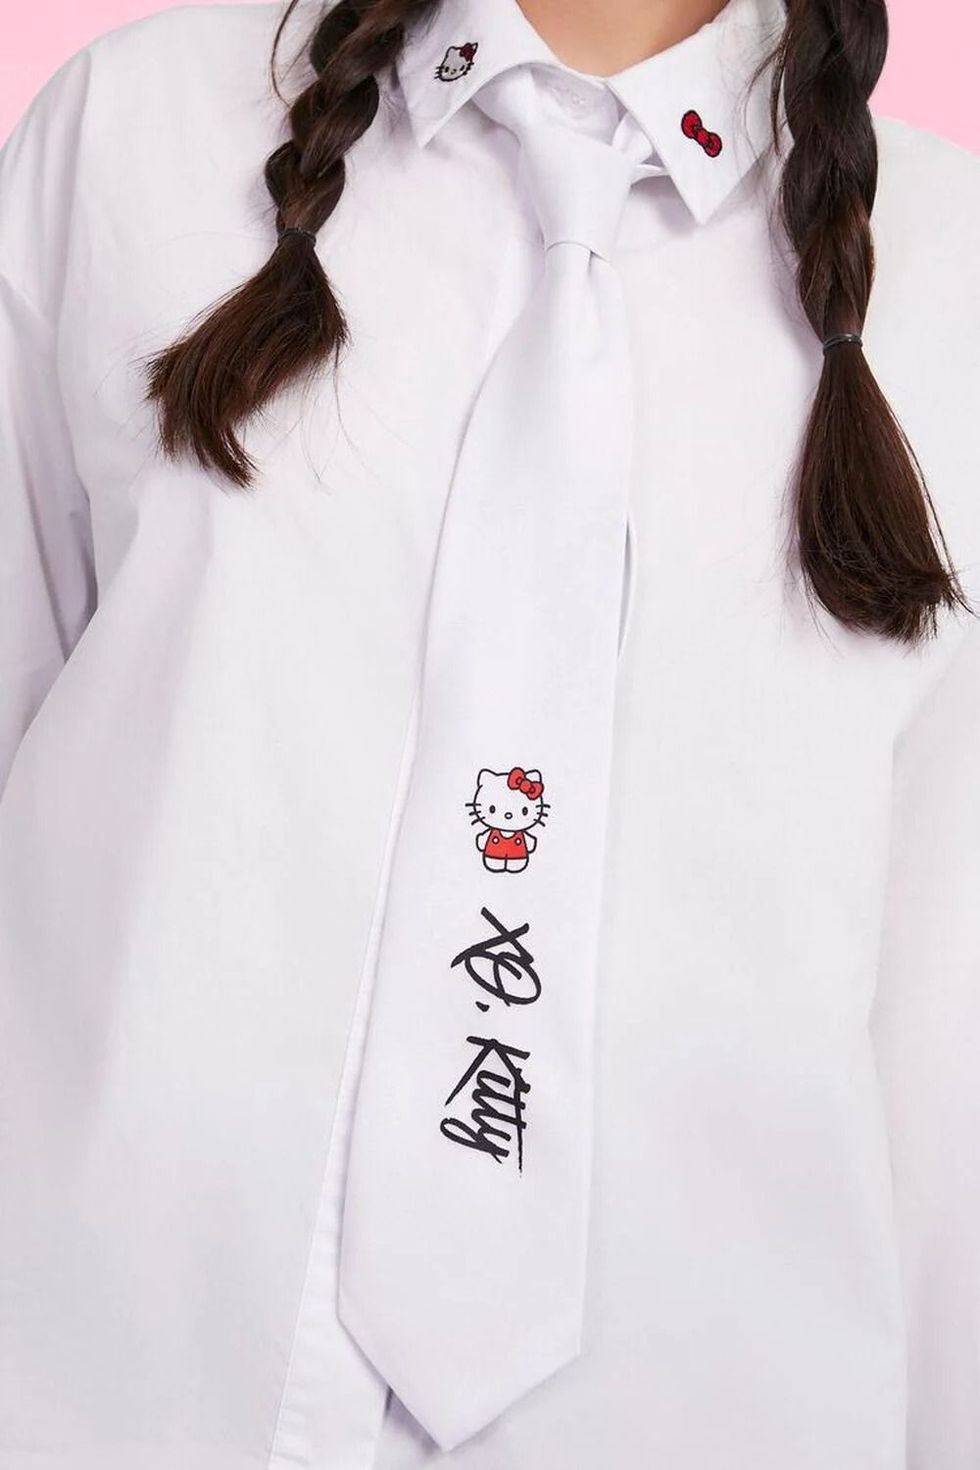 Forever 21 x Hello Kitty XO Kitty Varsity Jacket is a back to